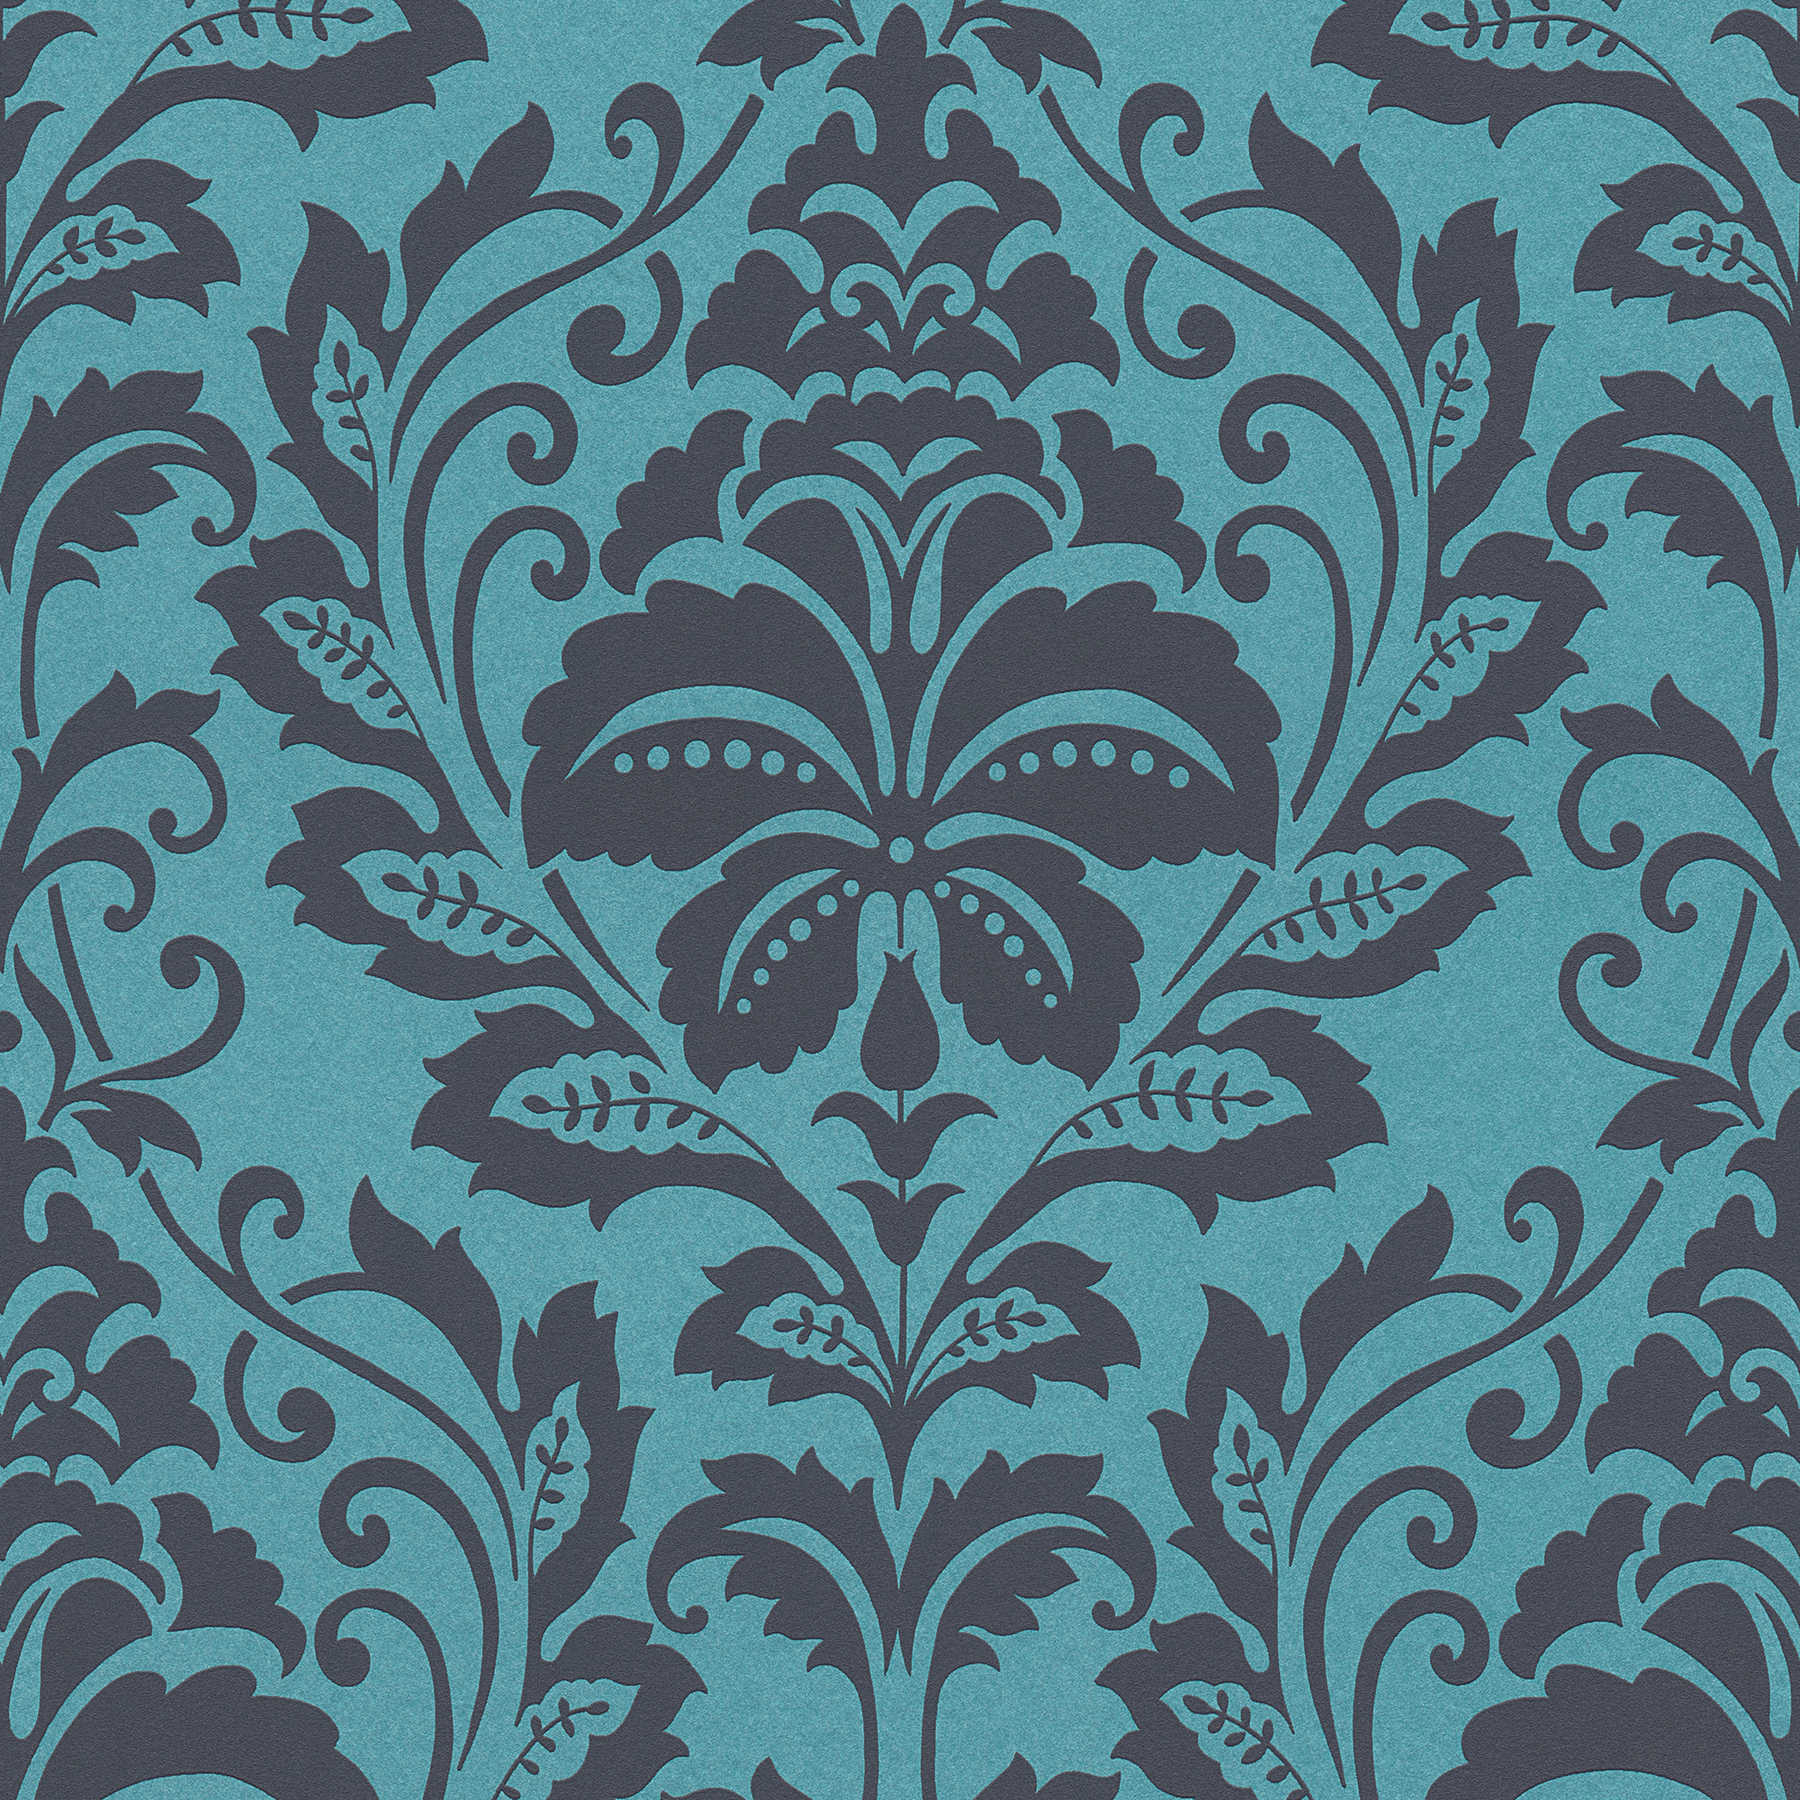 Neo-Klassik Ornament Tapete, floral – Blau, Schwarz
